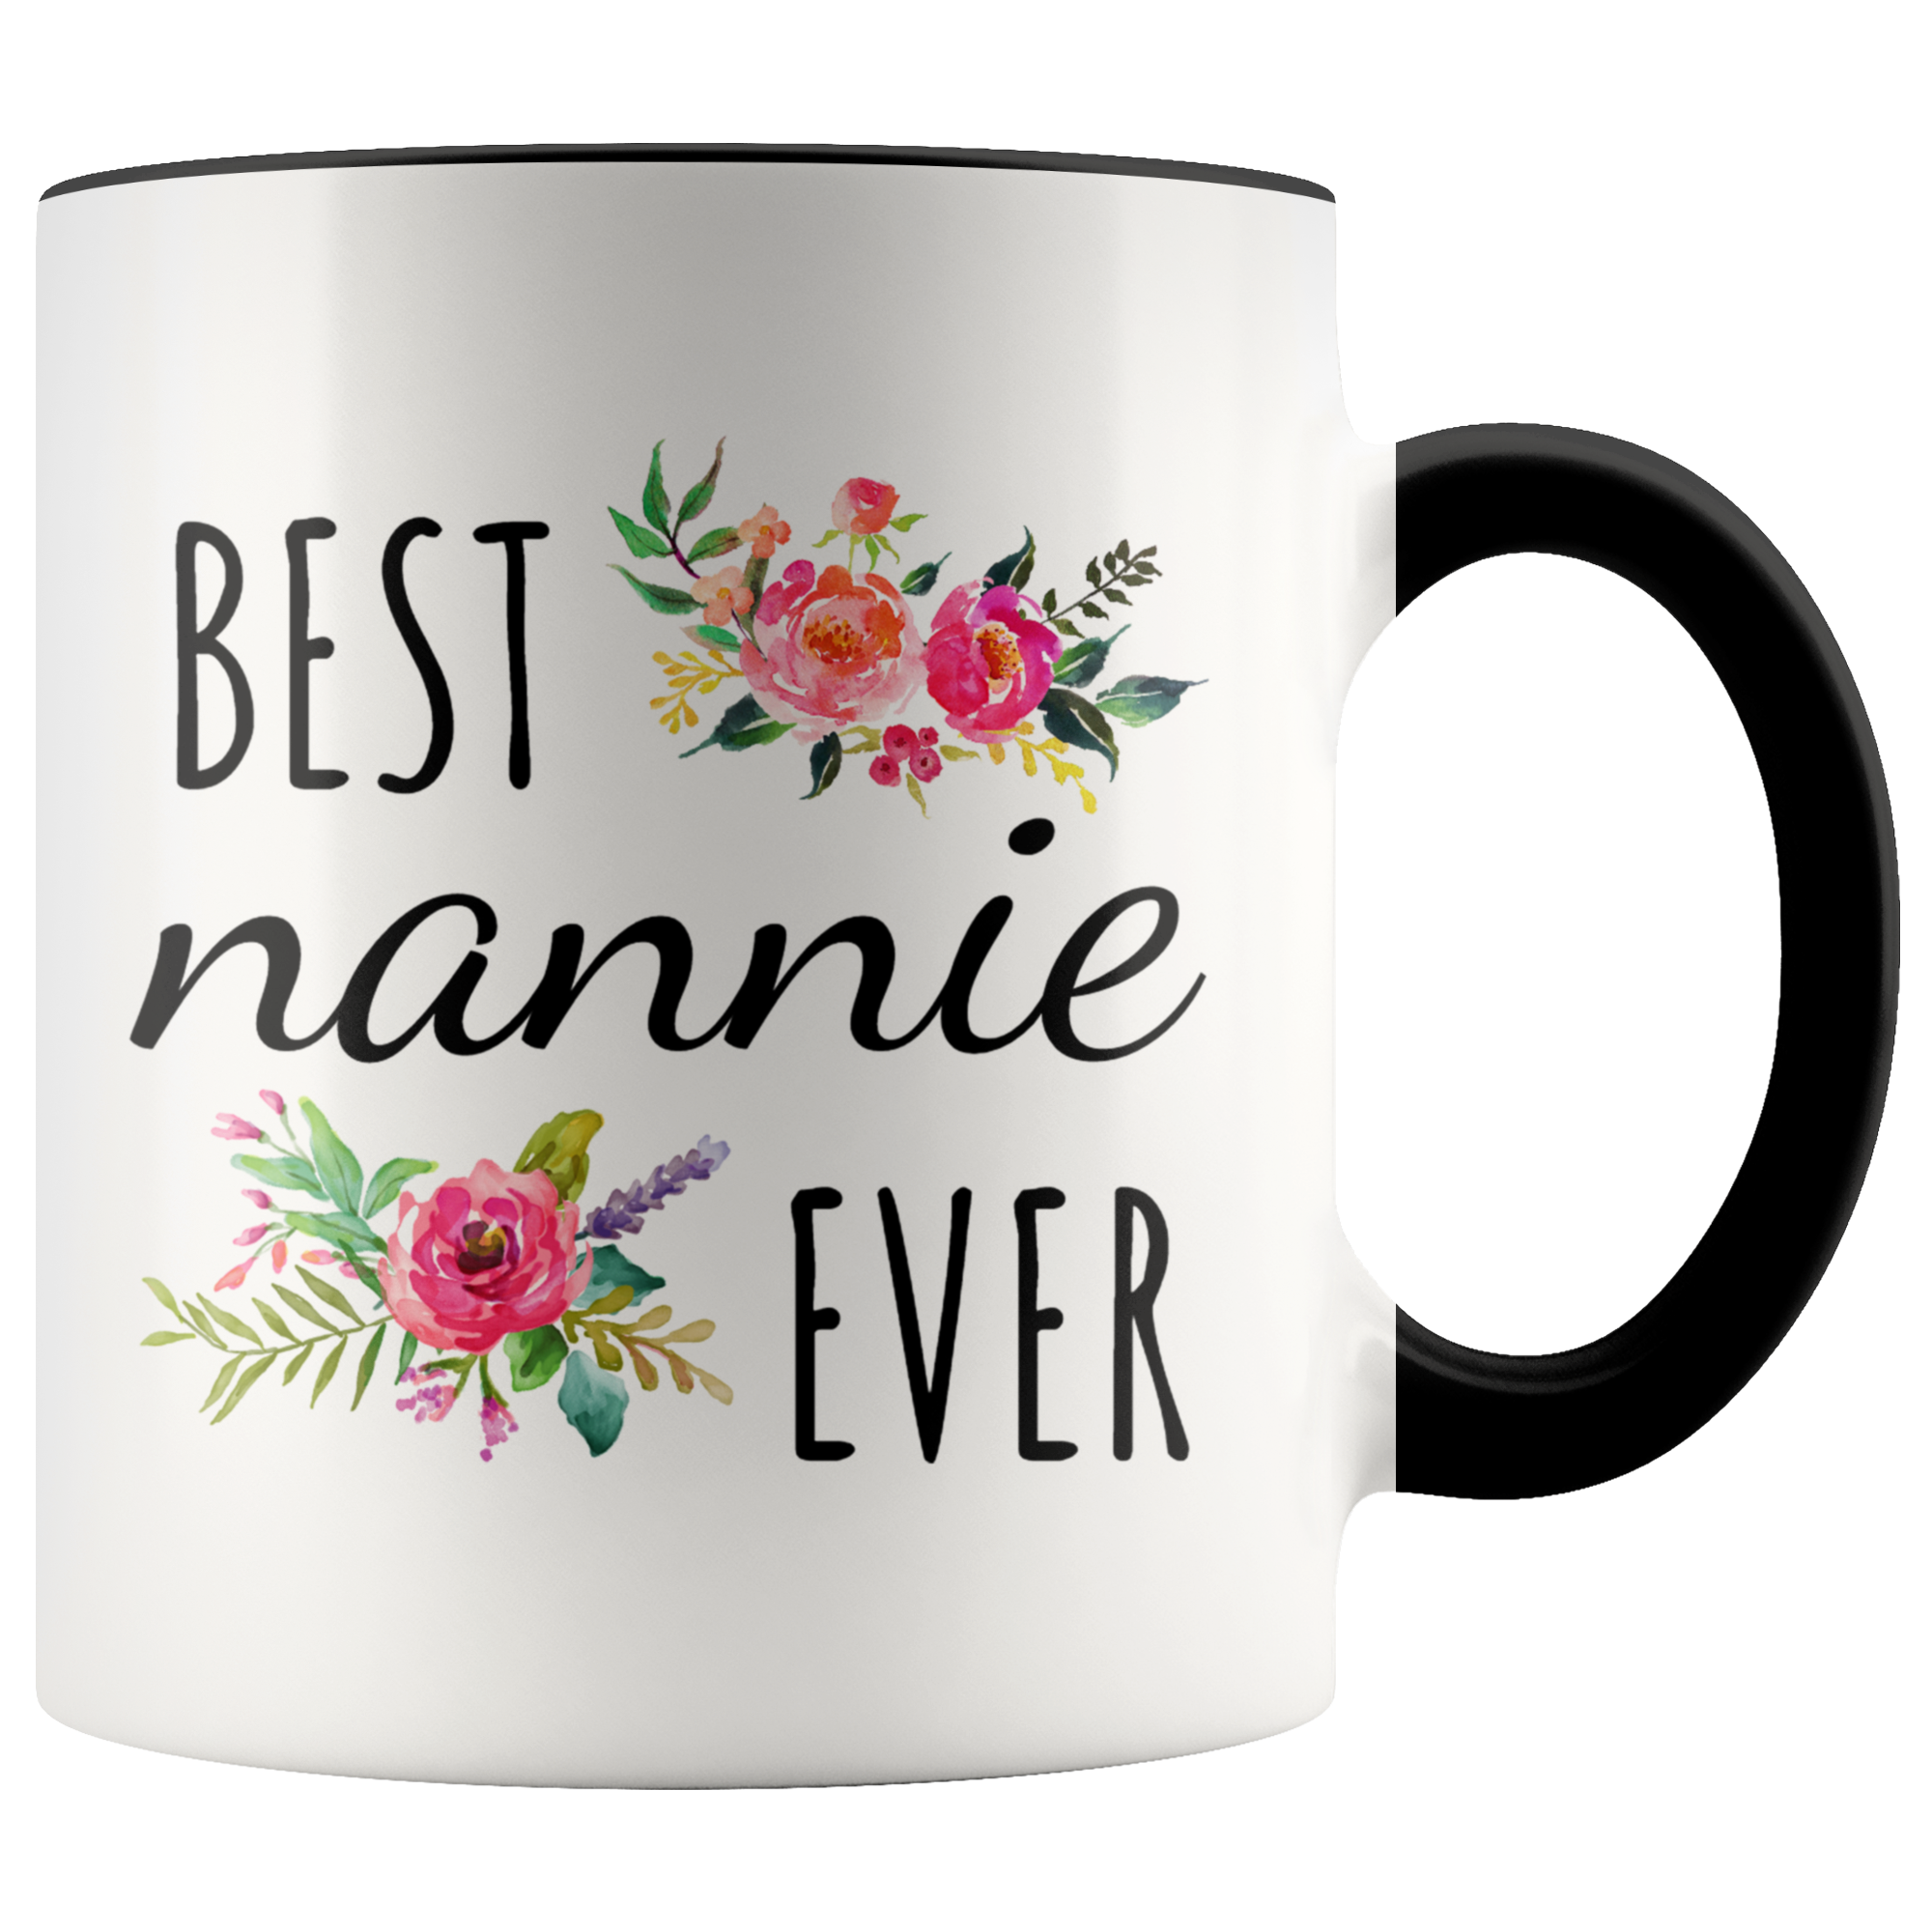 Best Nannie Mug